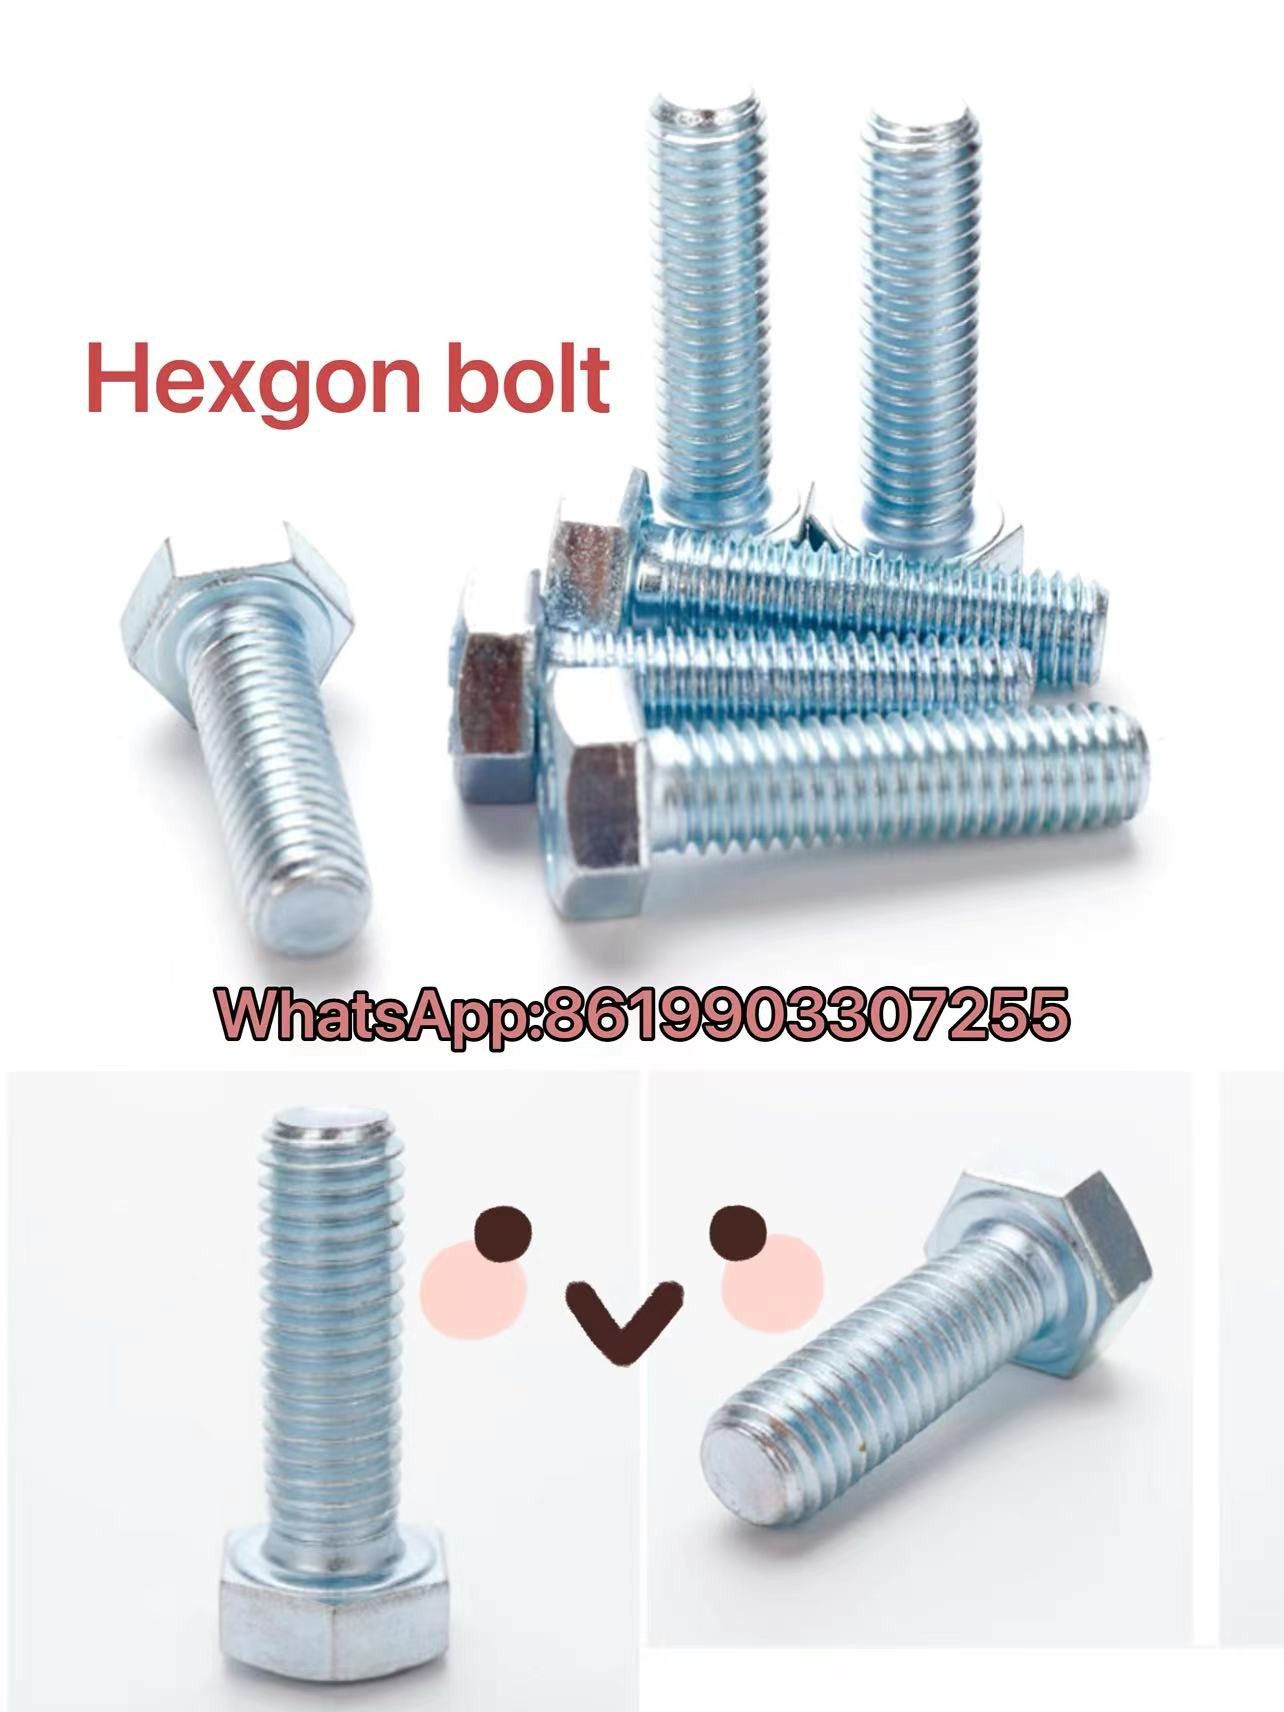 factory sales hexgon bolt WhatsApp:8619903307255-image